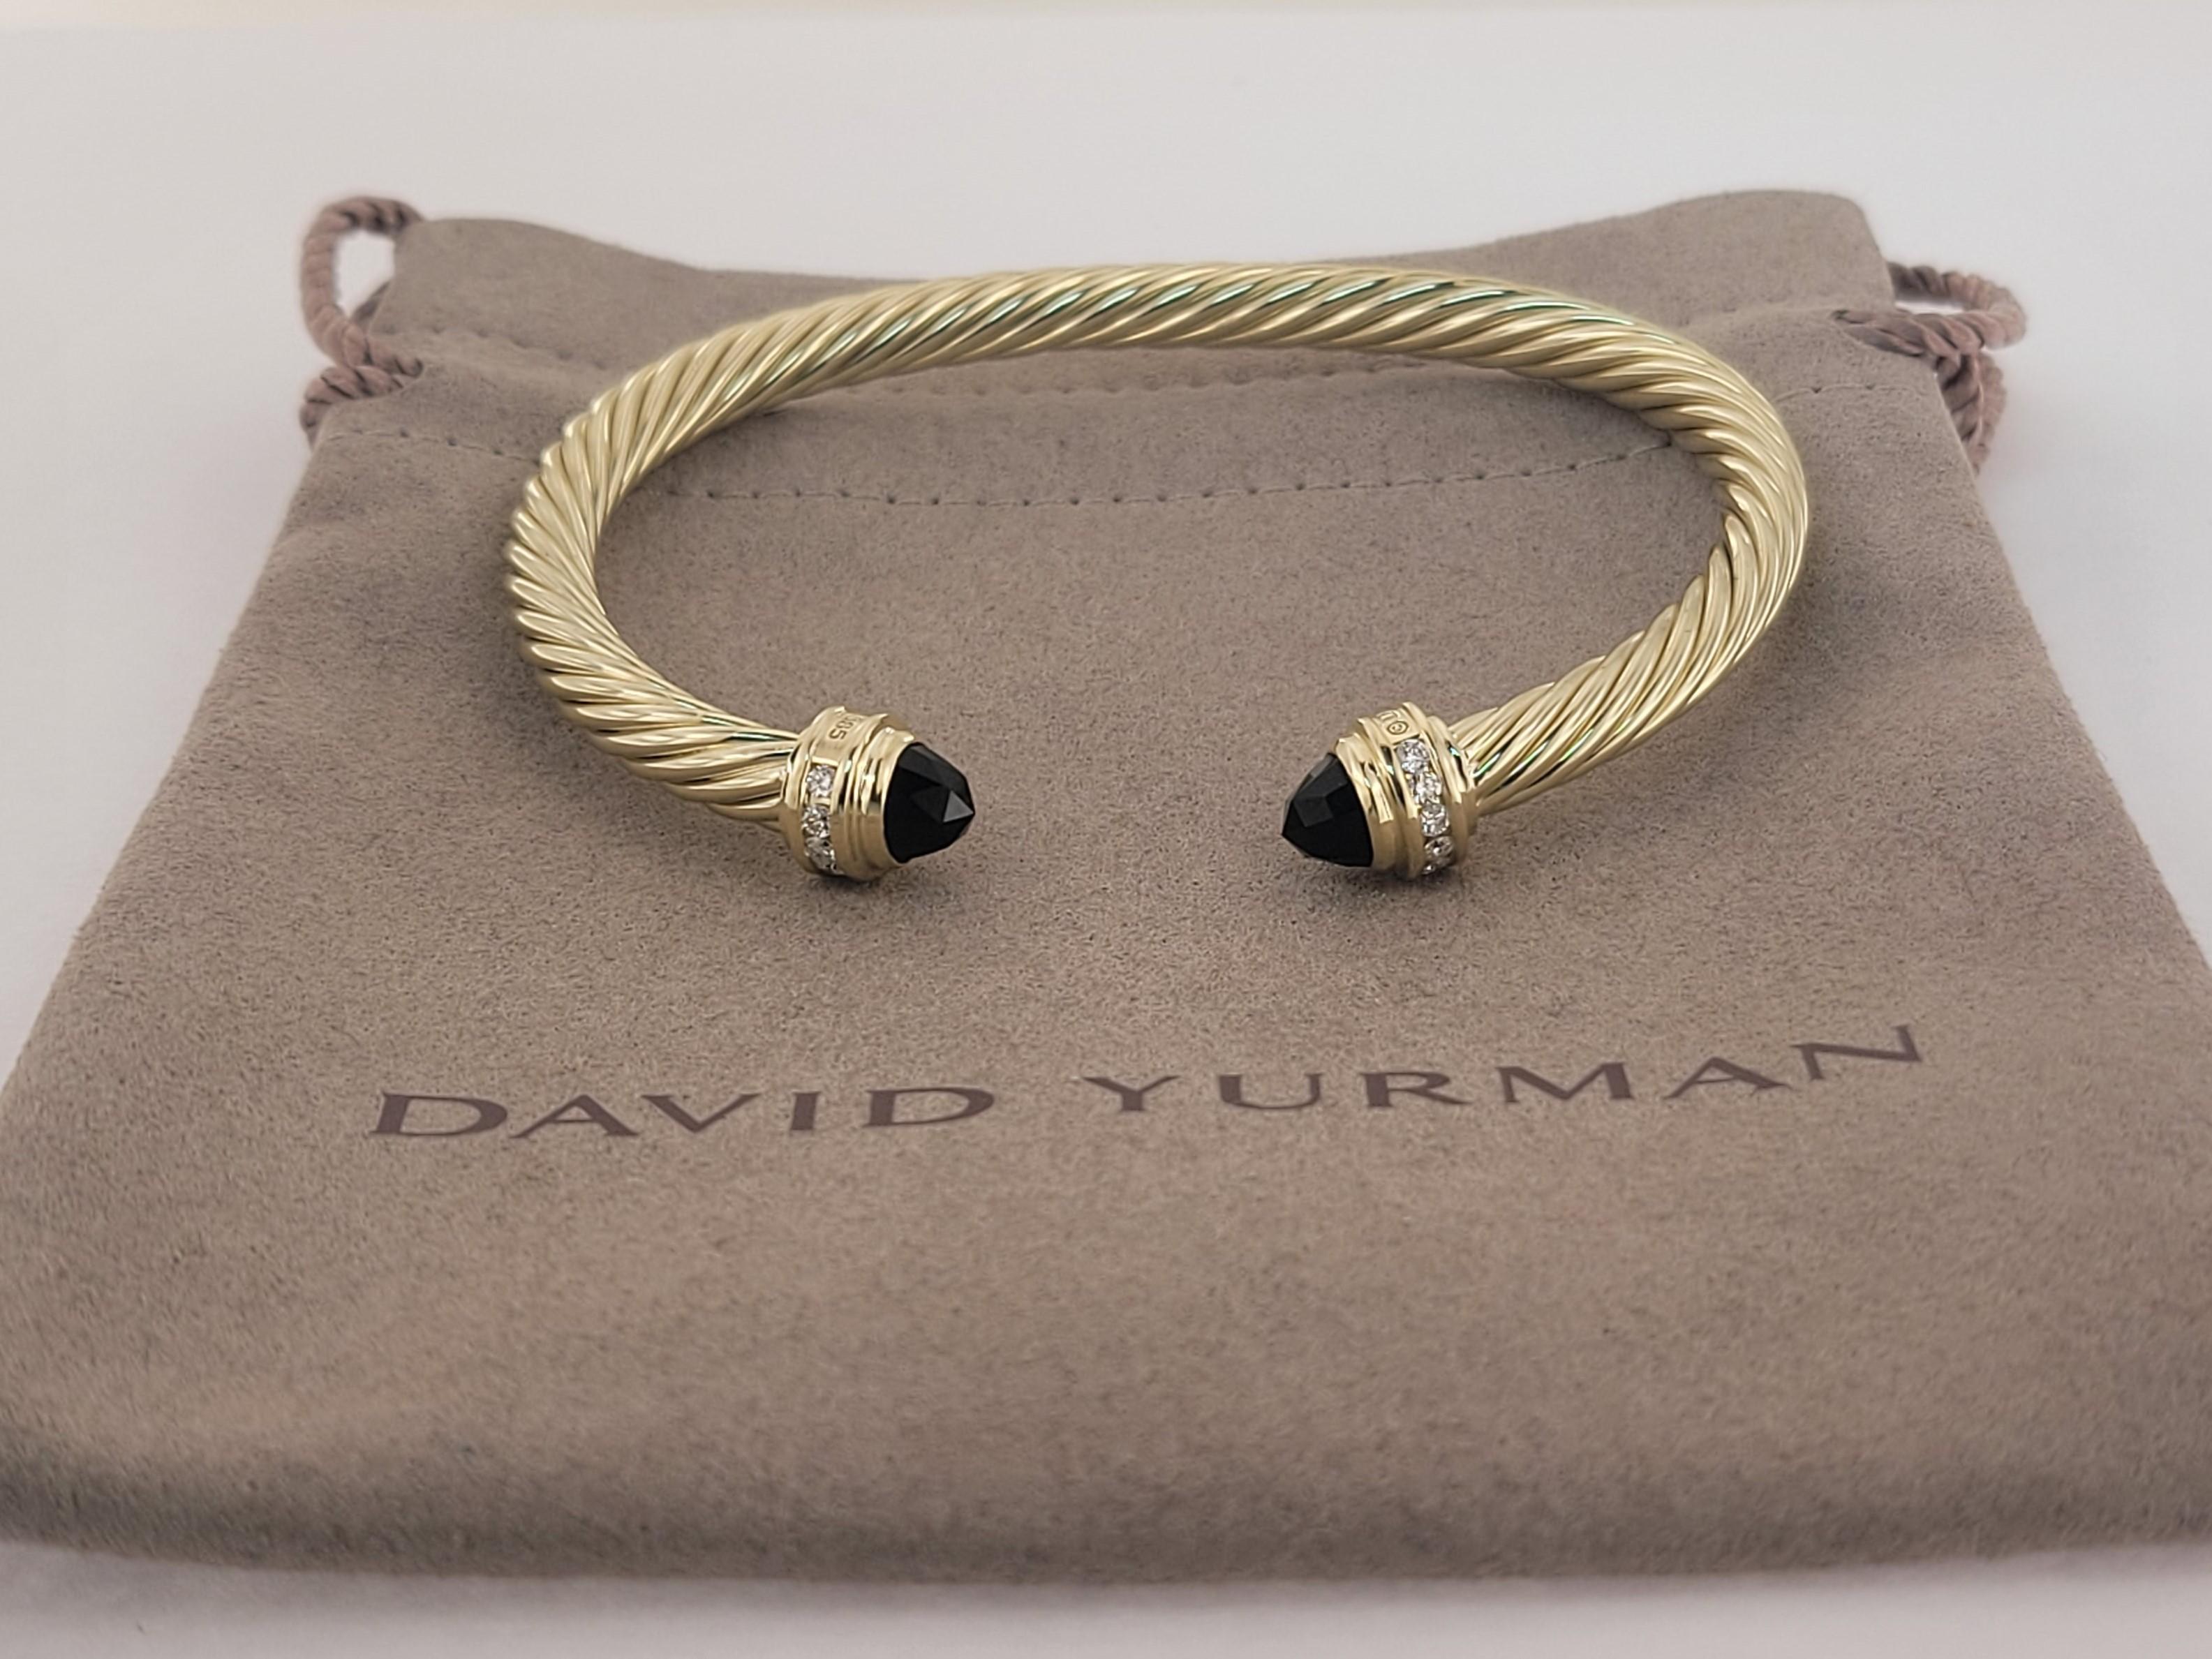 Brand David Yurman
Size Medium
Gender Women
Condition never worn
14K Yellow Gold
Black onyx 
Pave Diamond 0.41 total carat weight
Width 5mm
Weight 15.5gr